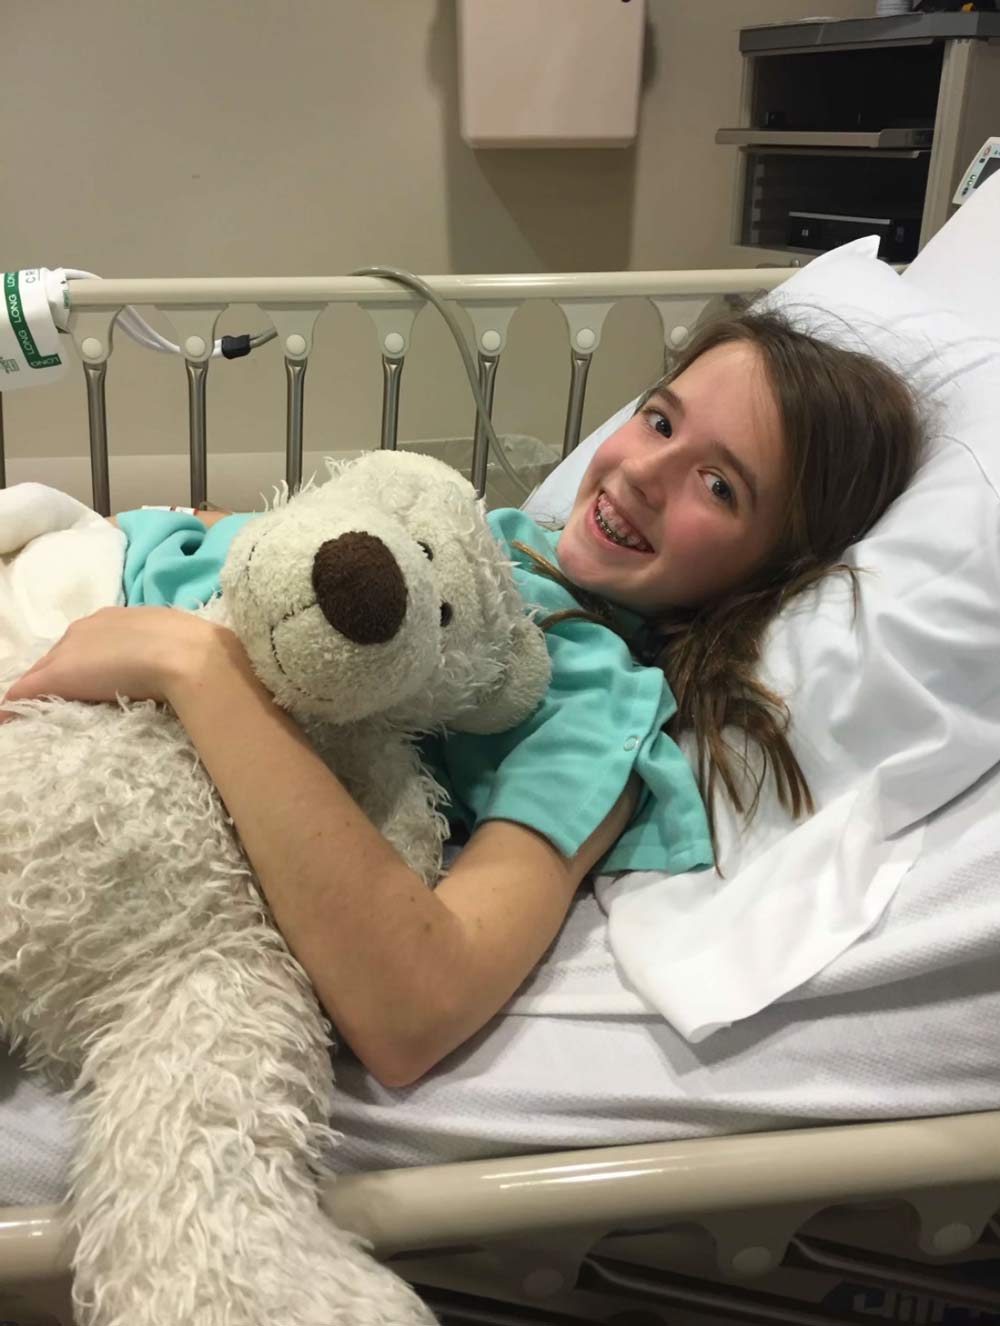 Hanley as a child in the hospital with a teddy bear